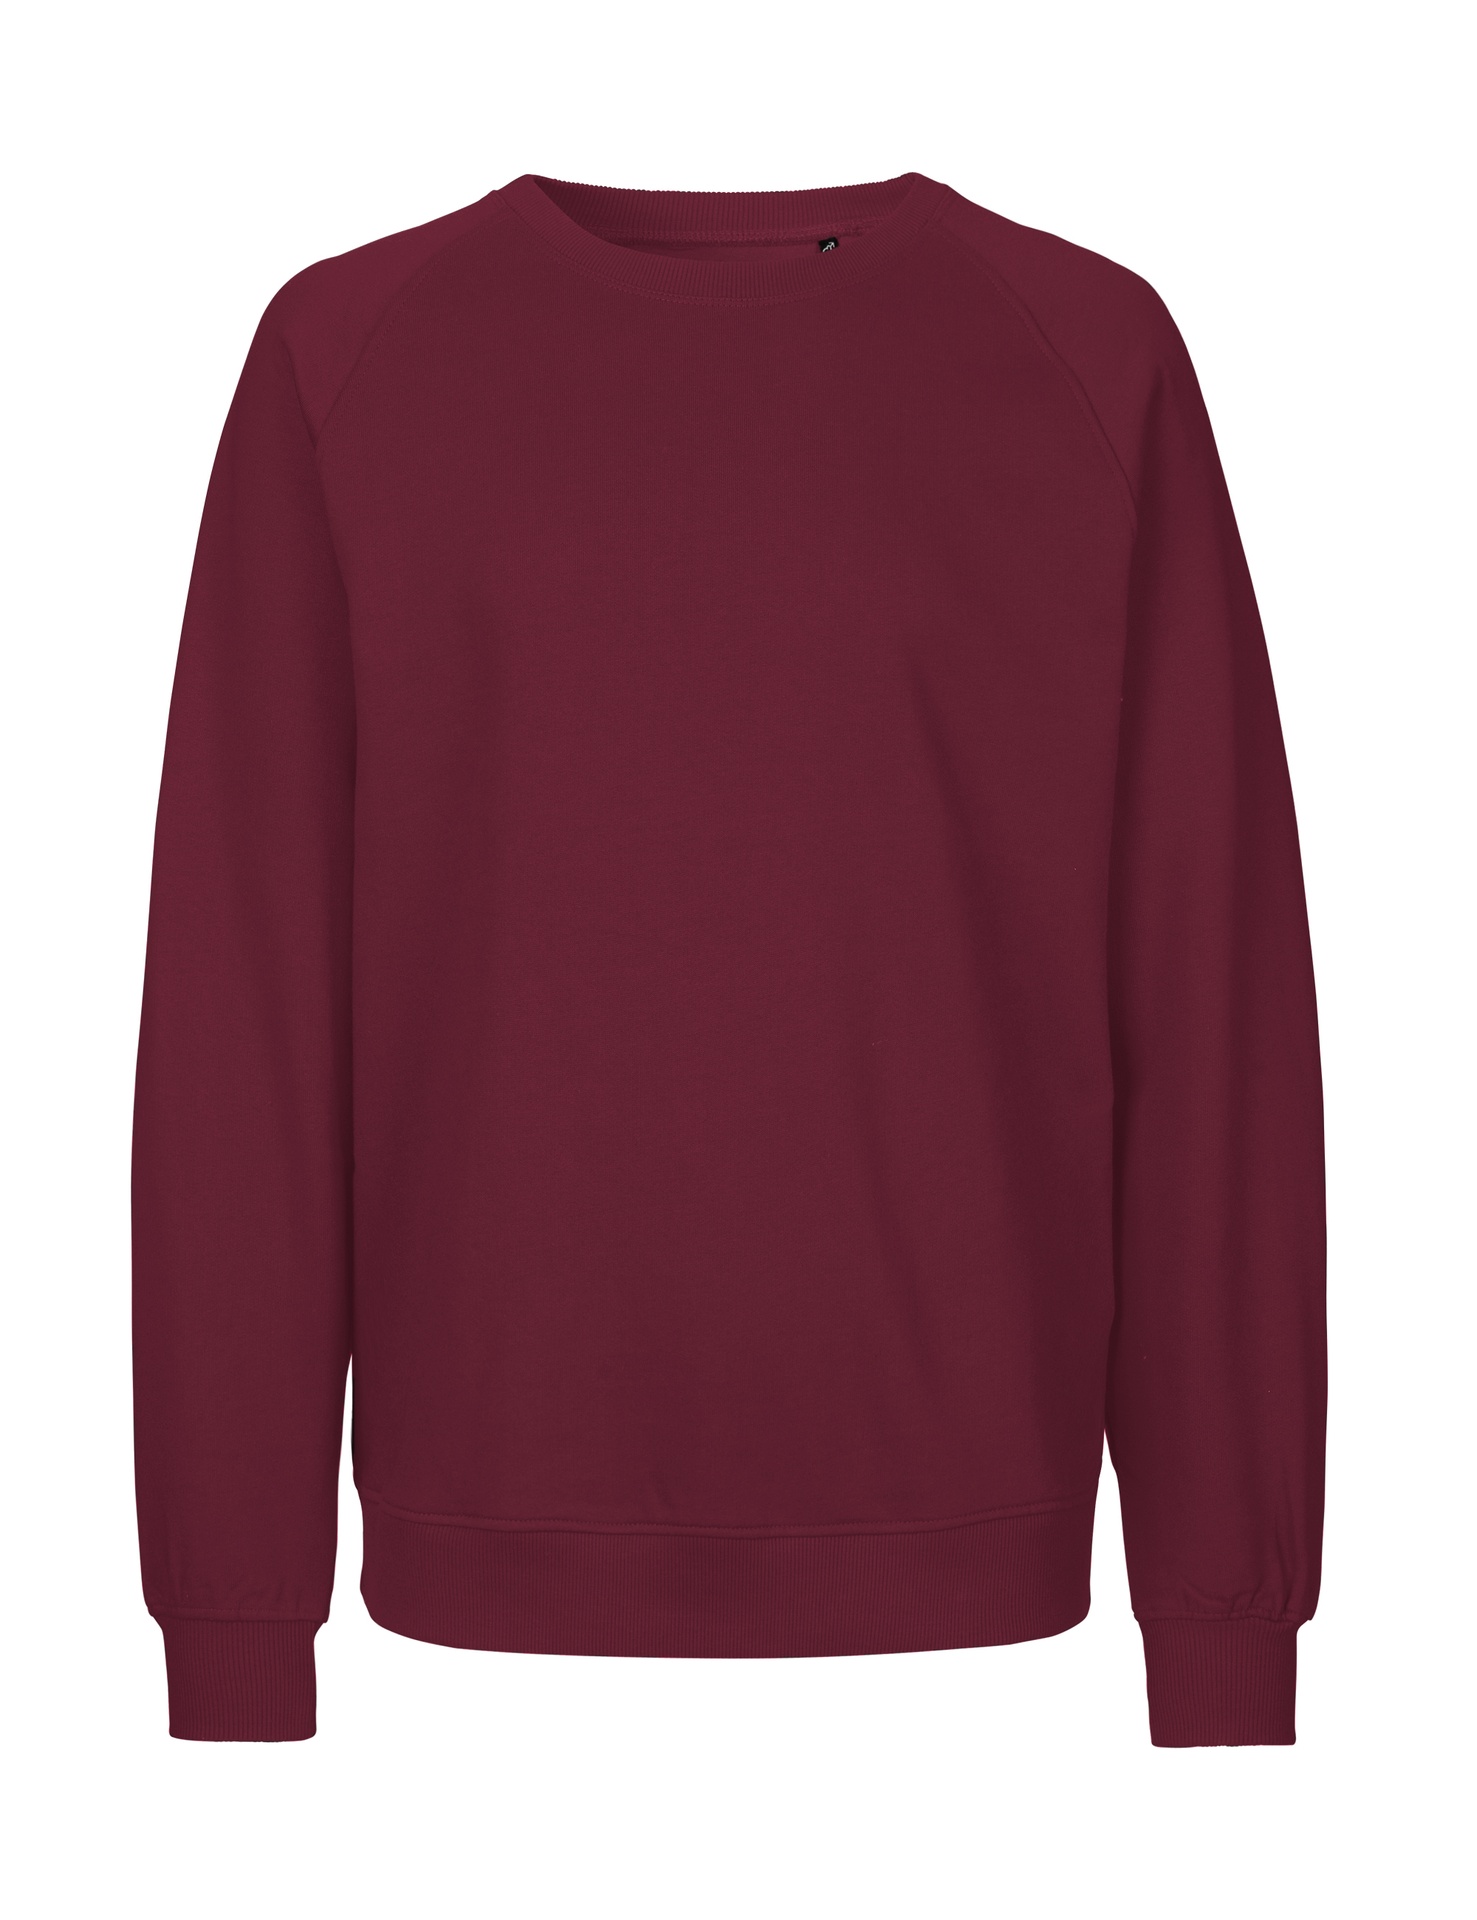 [PR/02764] Unisex Sweatshirt (Bordeaux 26, XL)